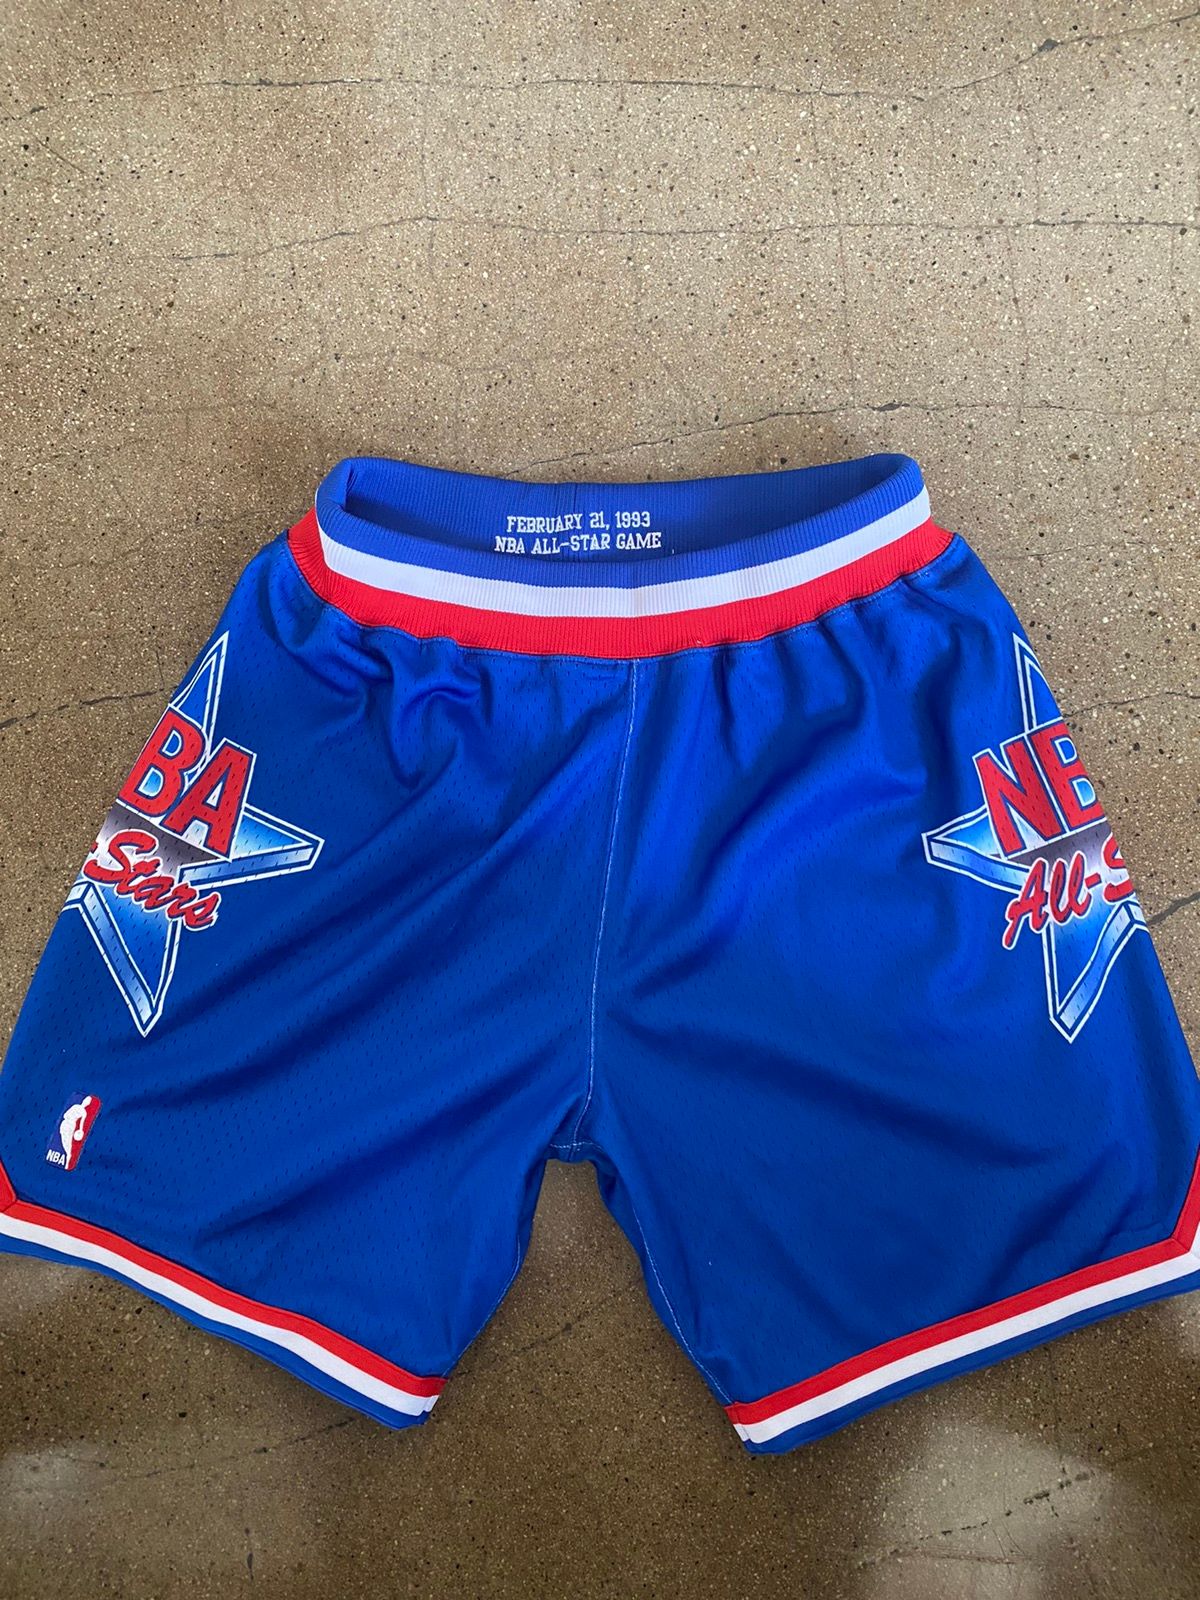 1993 nba all star shorts